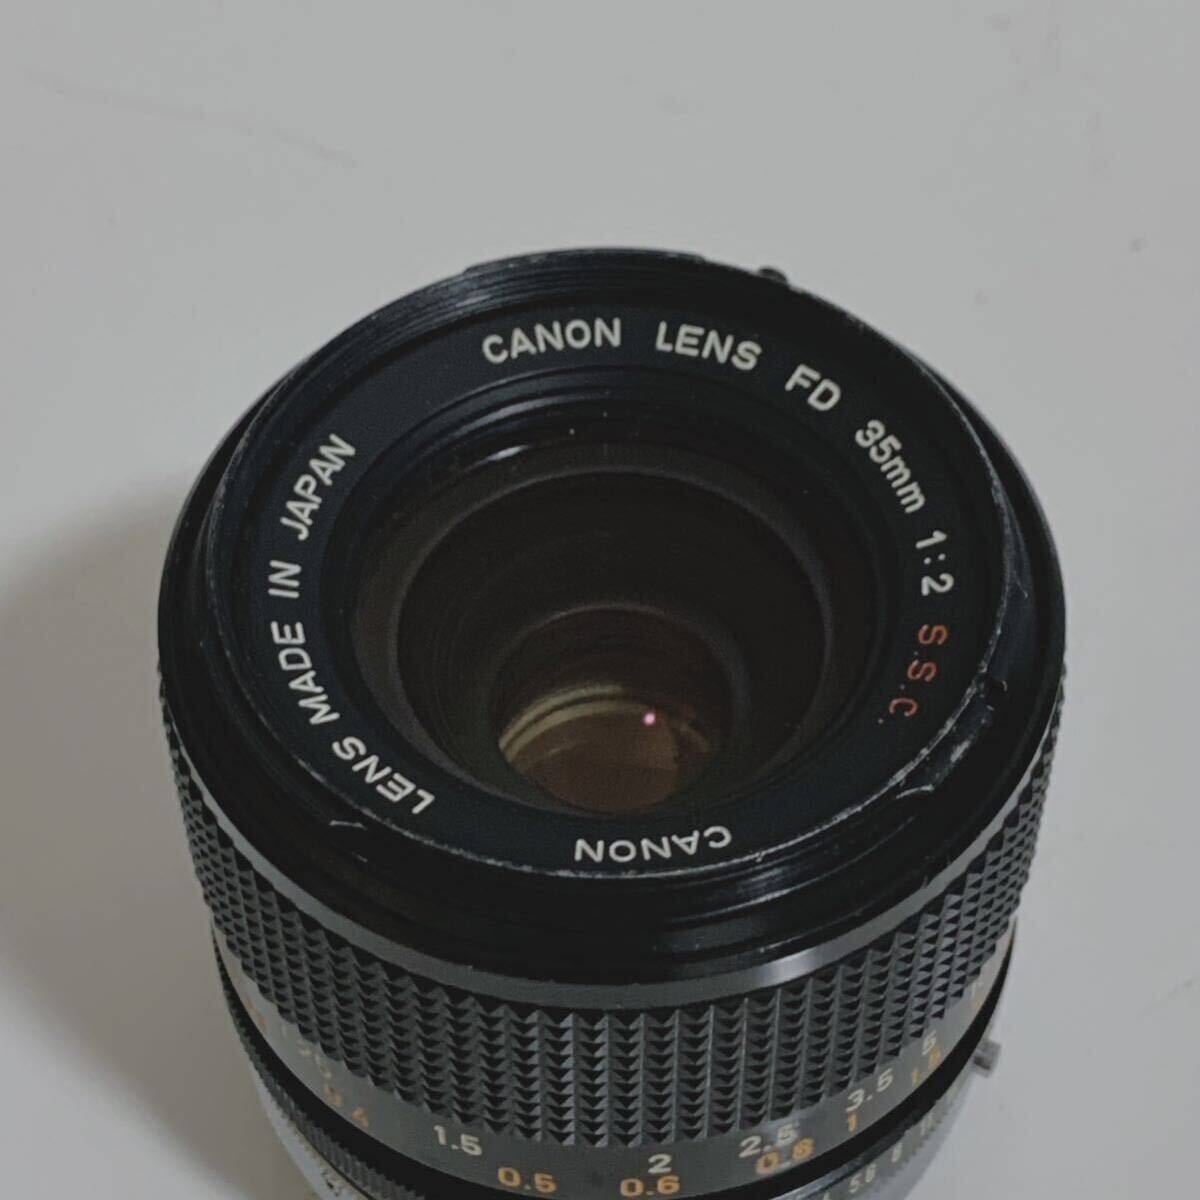 Canon Canon LENS FD 35mm 1:2 S.S.C F2 single burnt point camera lens Junk 